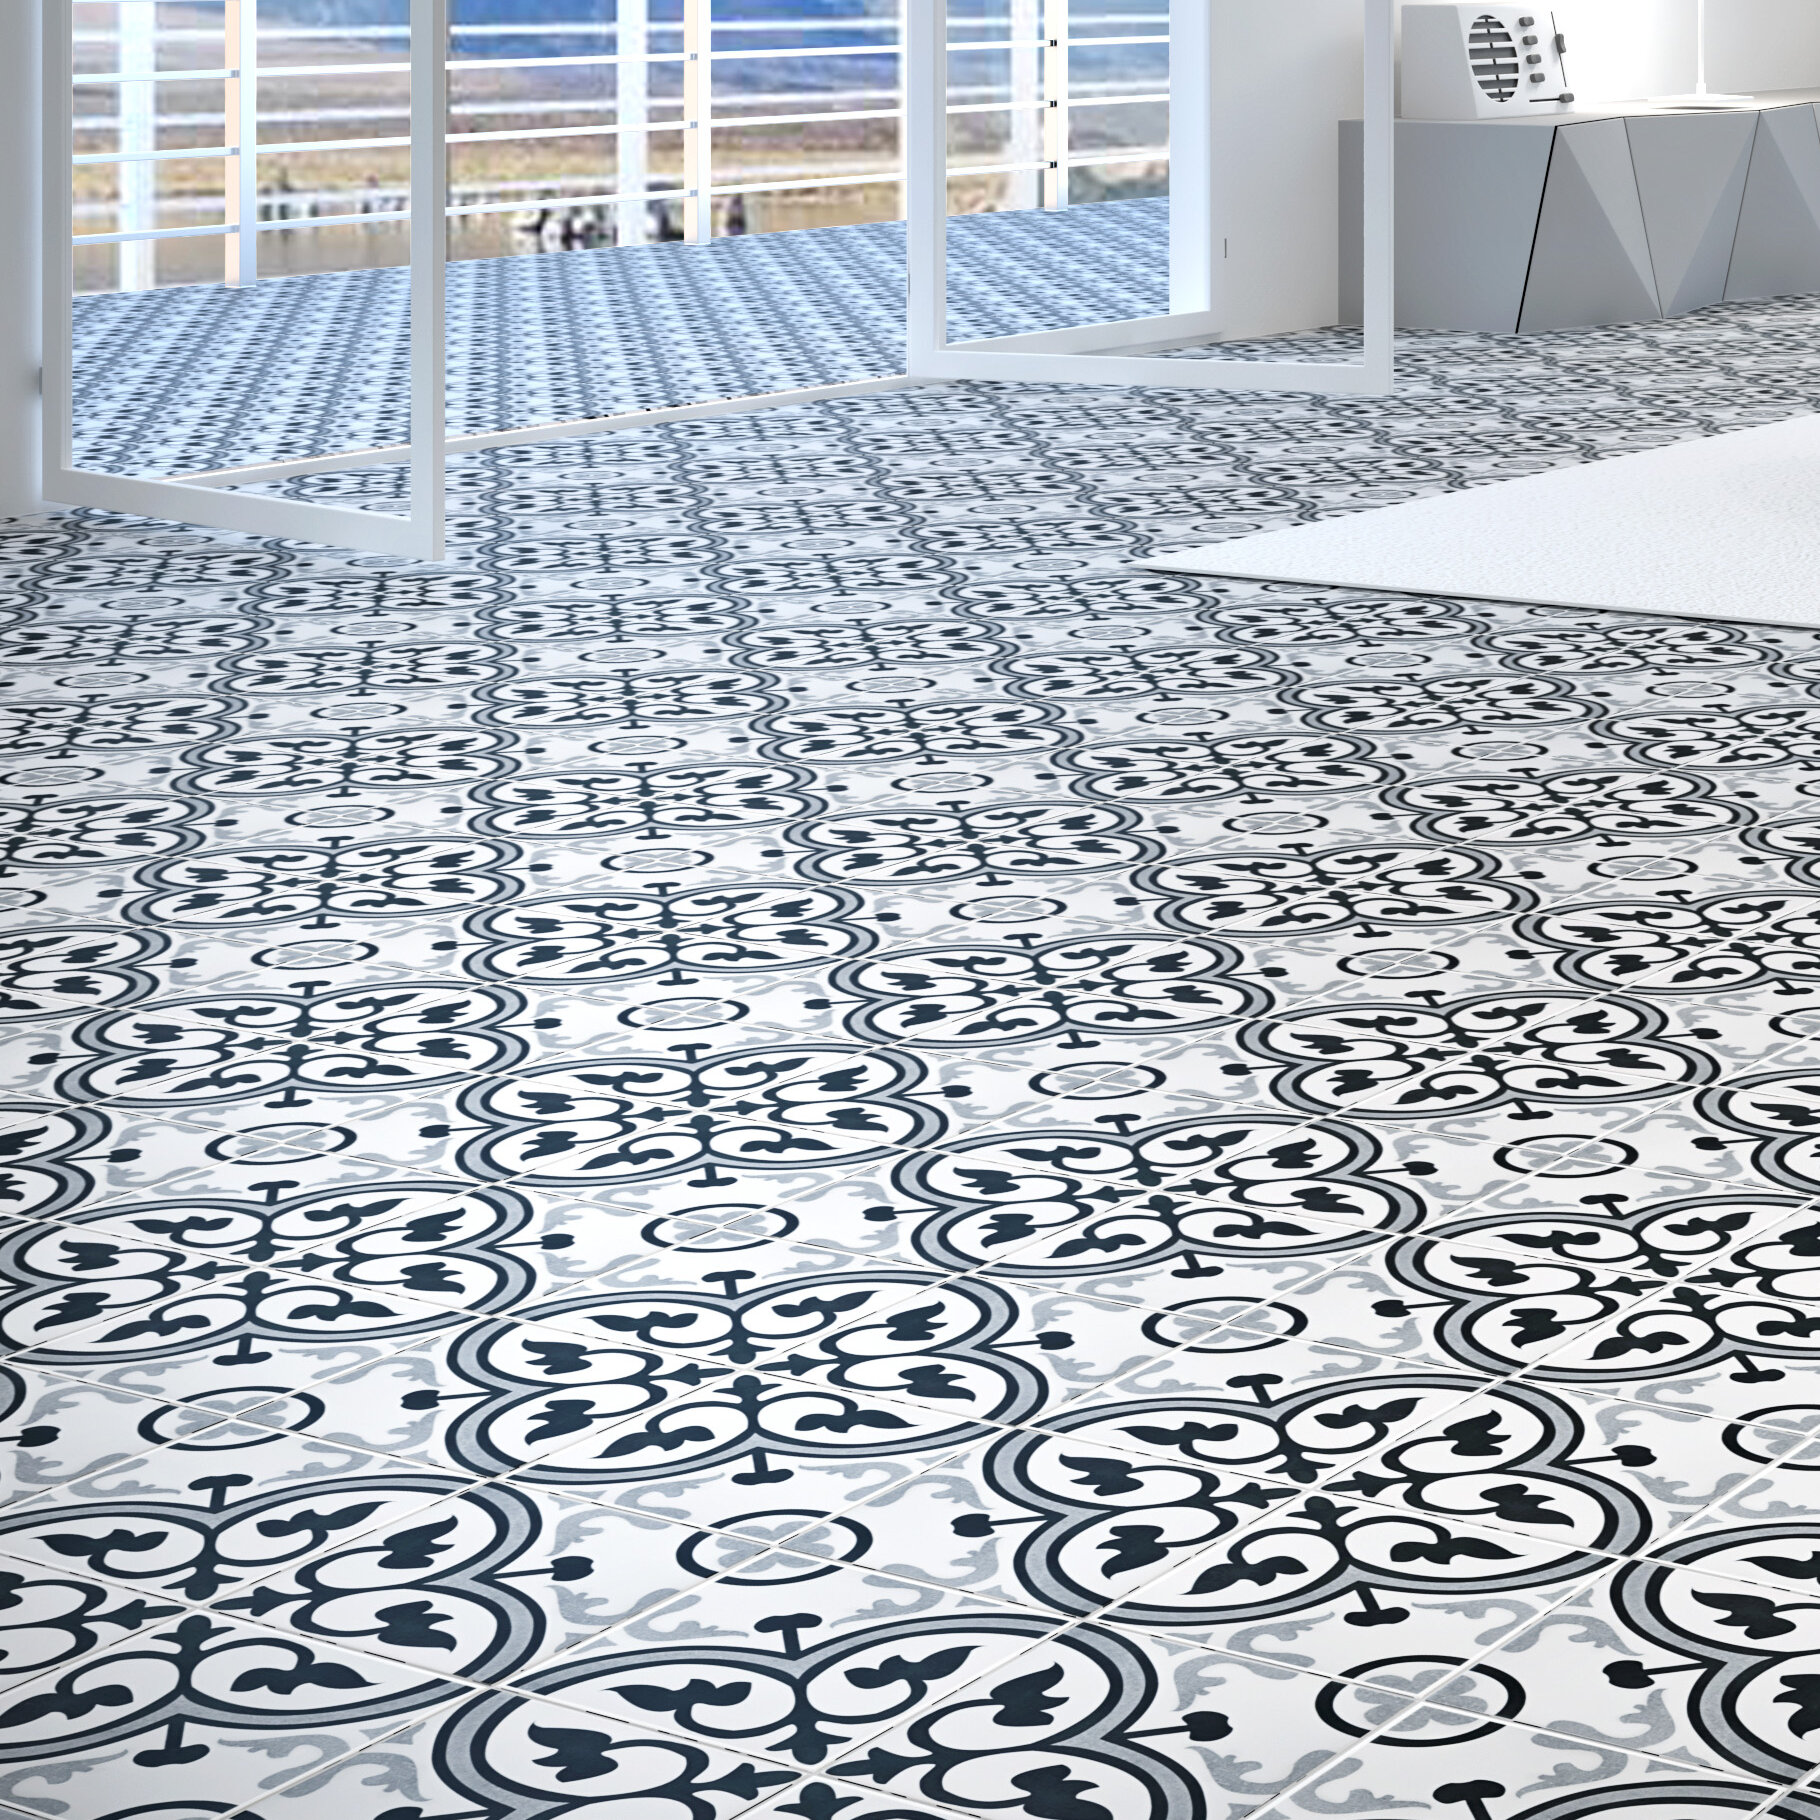 Elitetile Mora Classic 12 X 12 Ceramic Field Tile Reviews